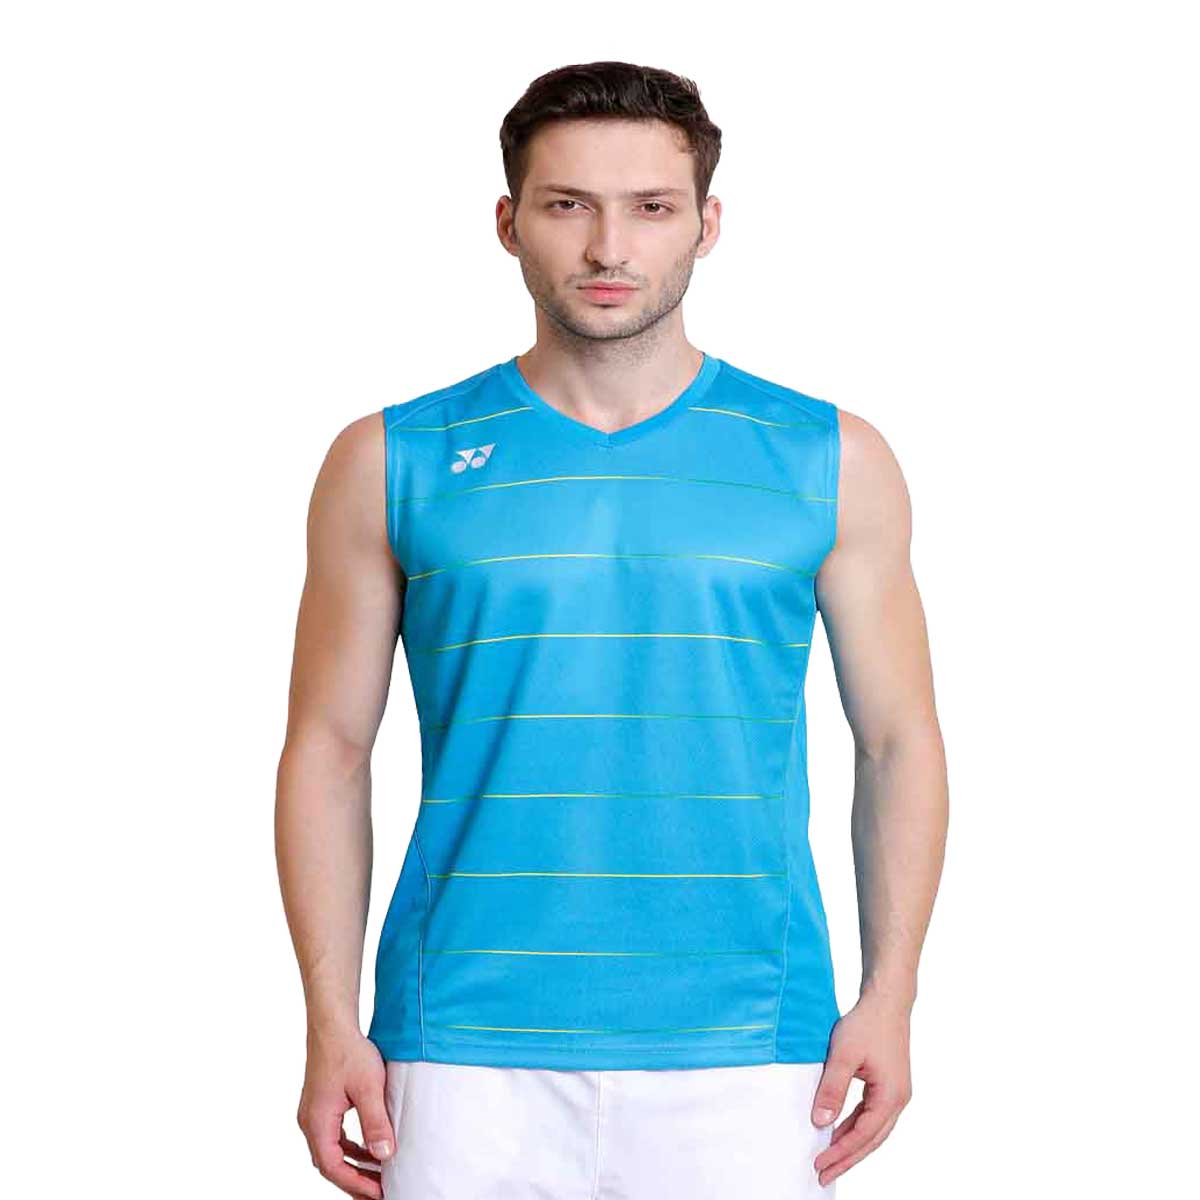 Buy Yonex Mens Sleeveless T-Shirt online India